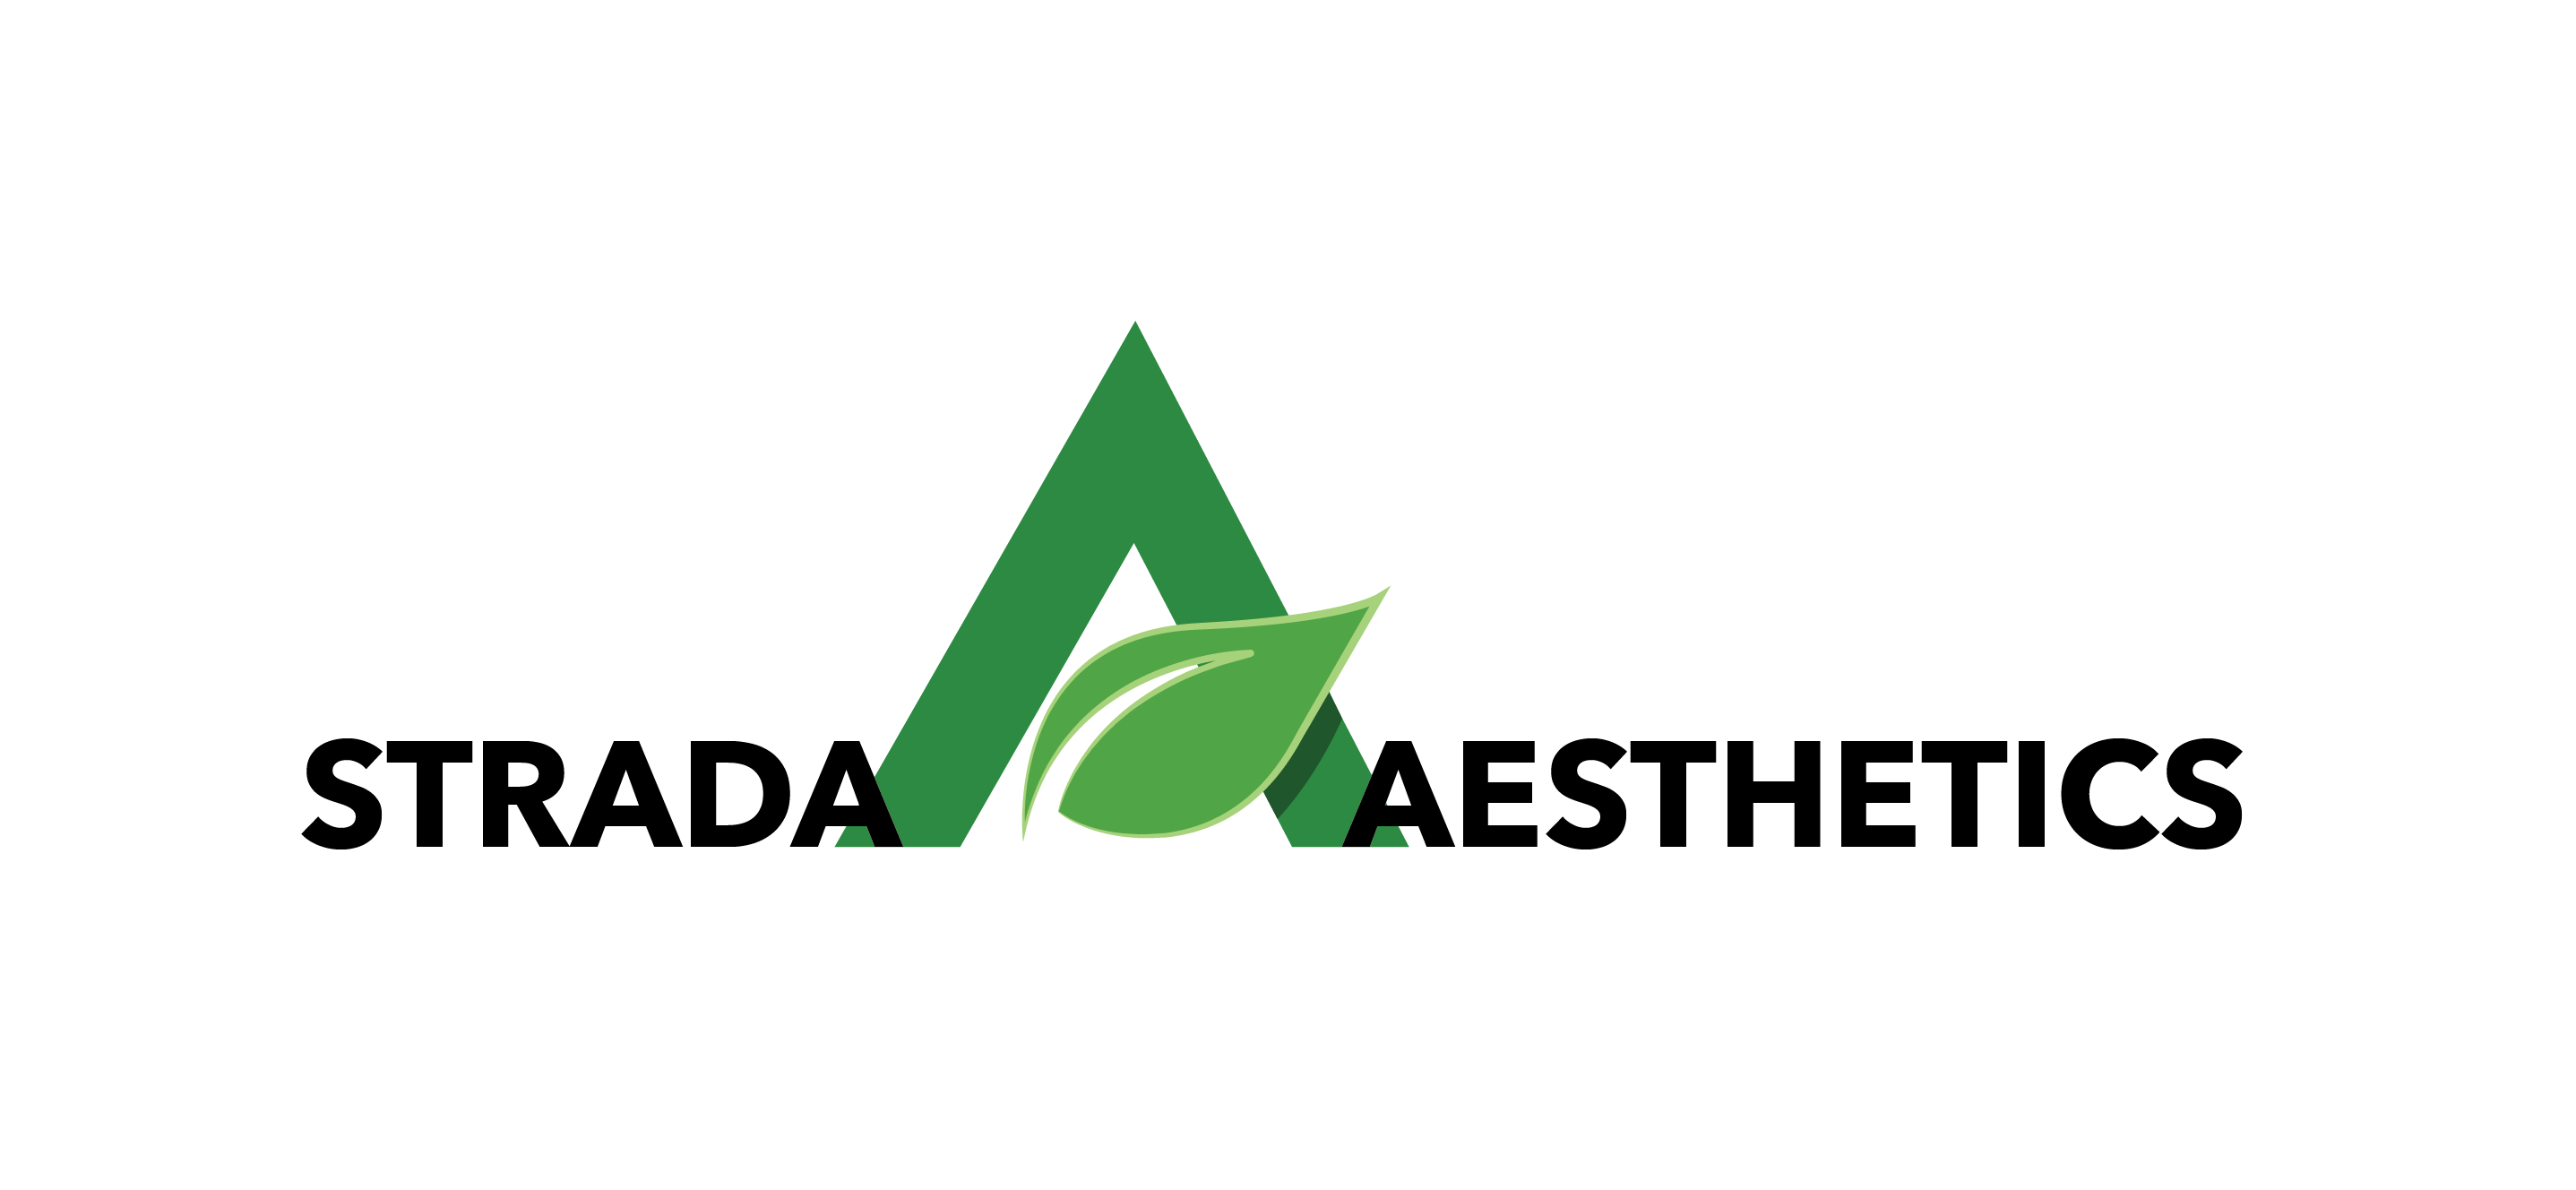 Strada Aesthetics Logo